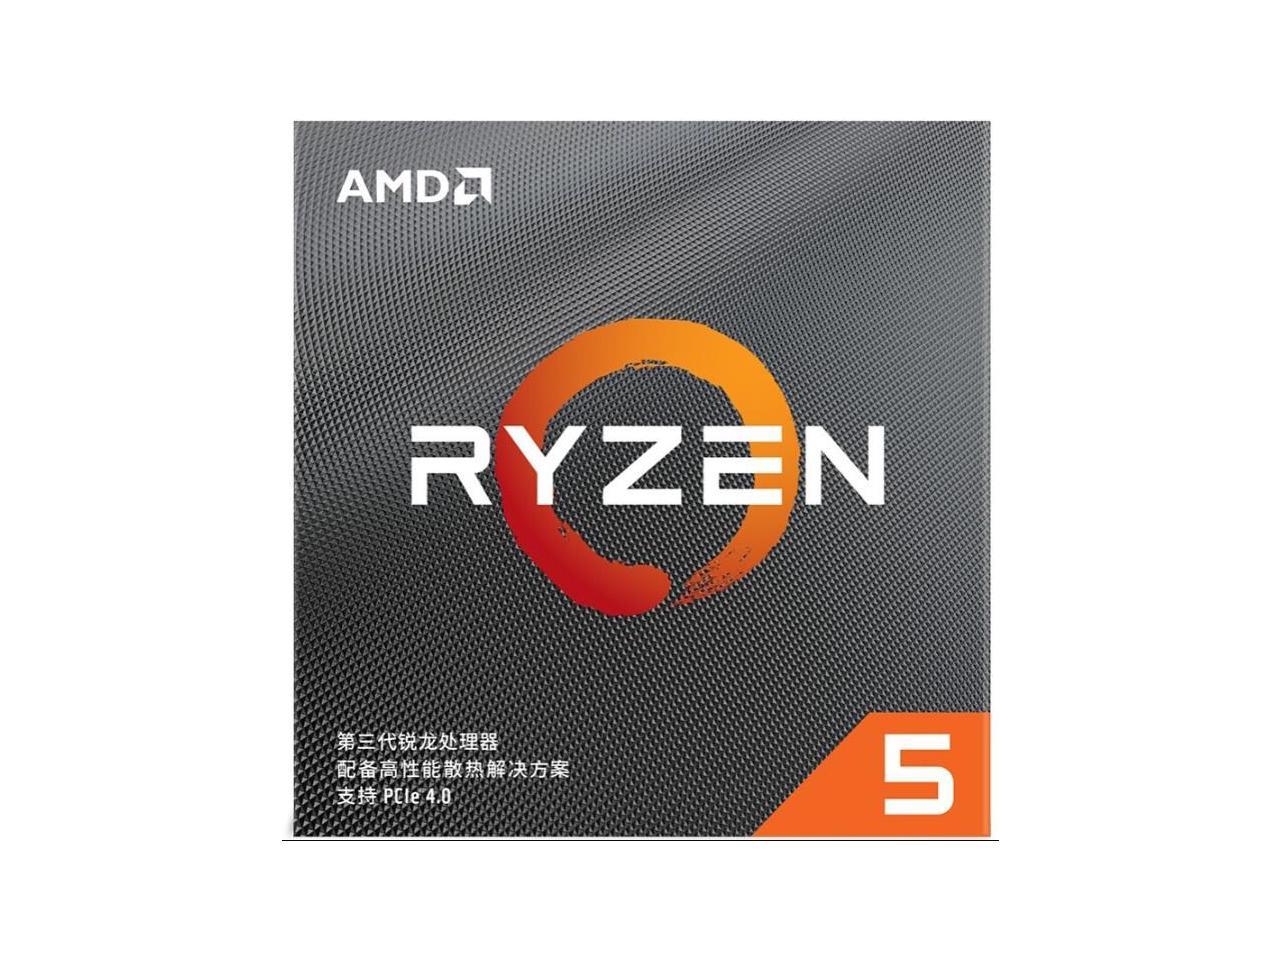 AMD RYZEN 5 3500X 6Core 3.6 GHz (4.1 GHz Turbo) Socket AM4 65W 100